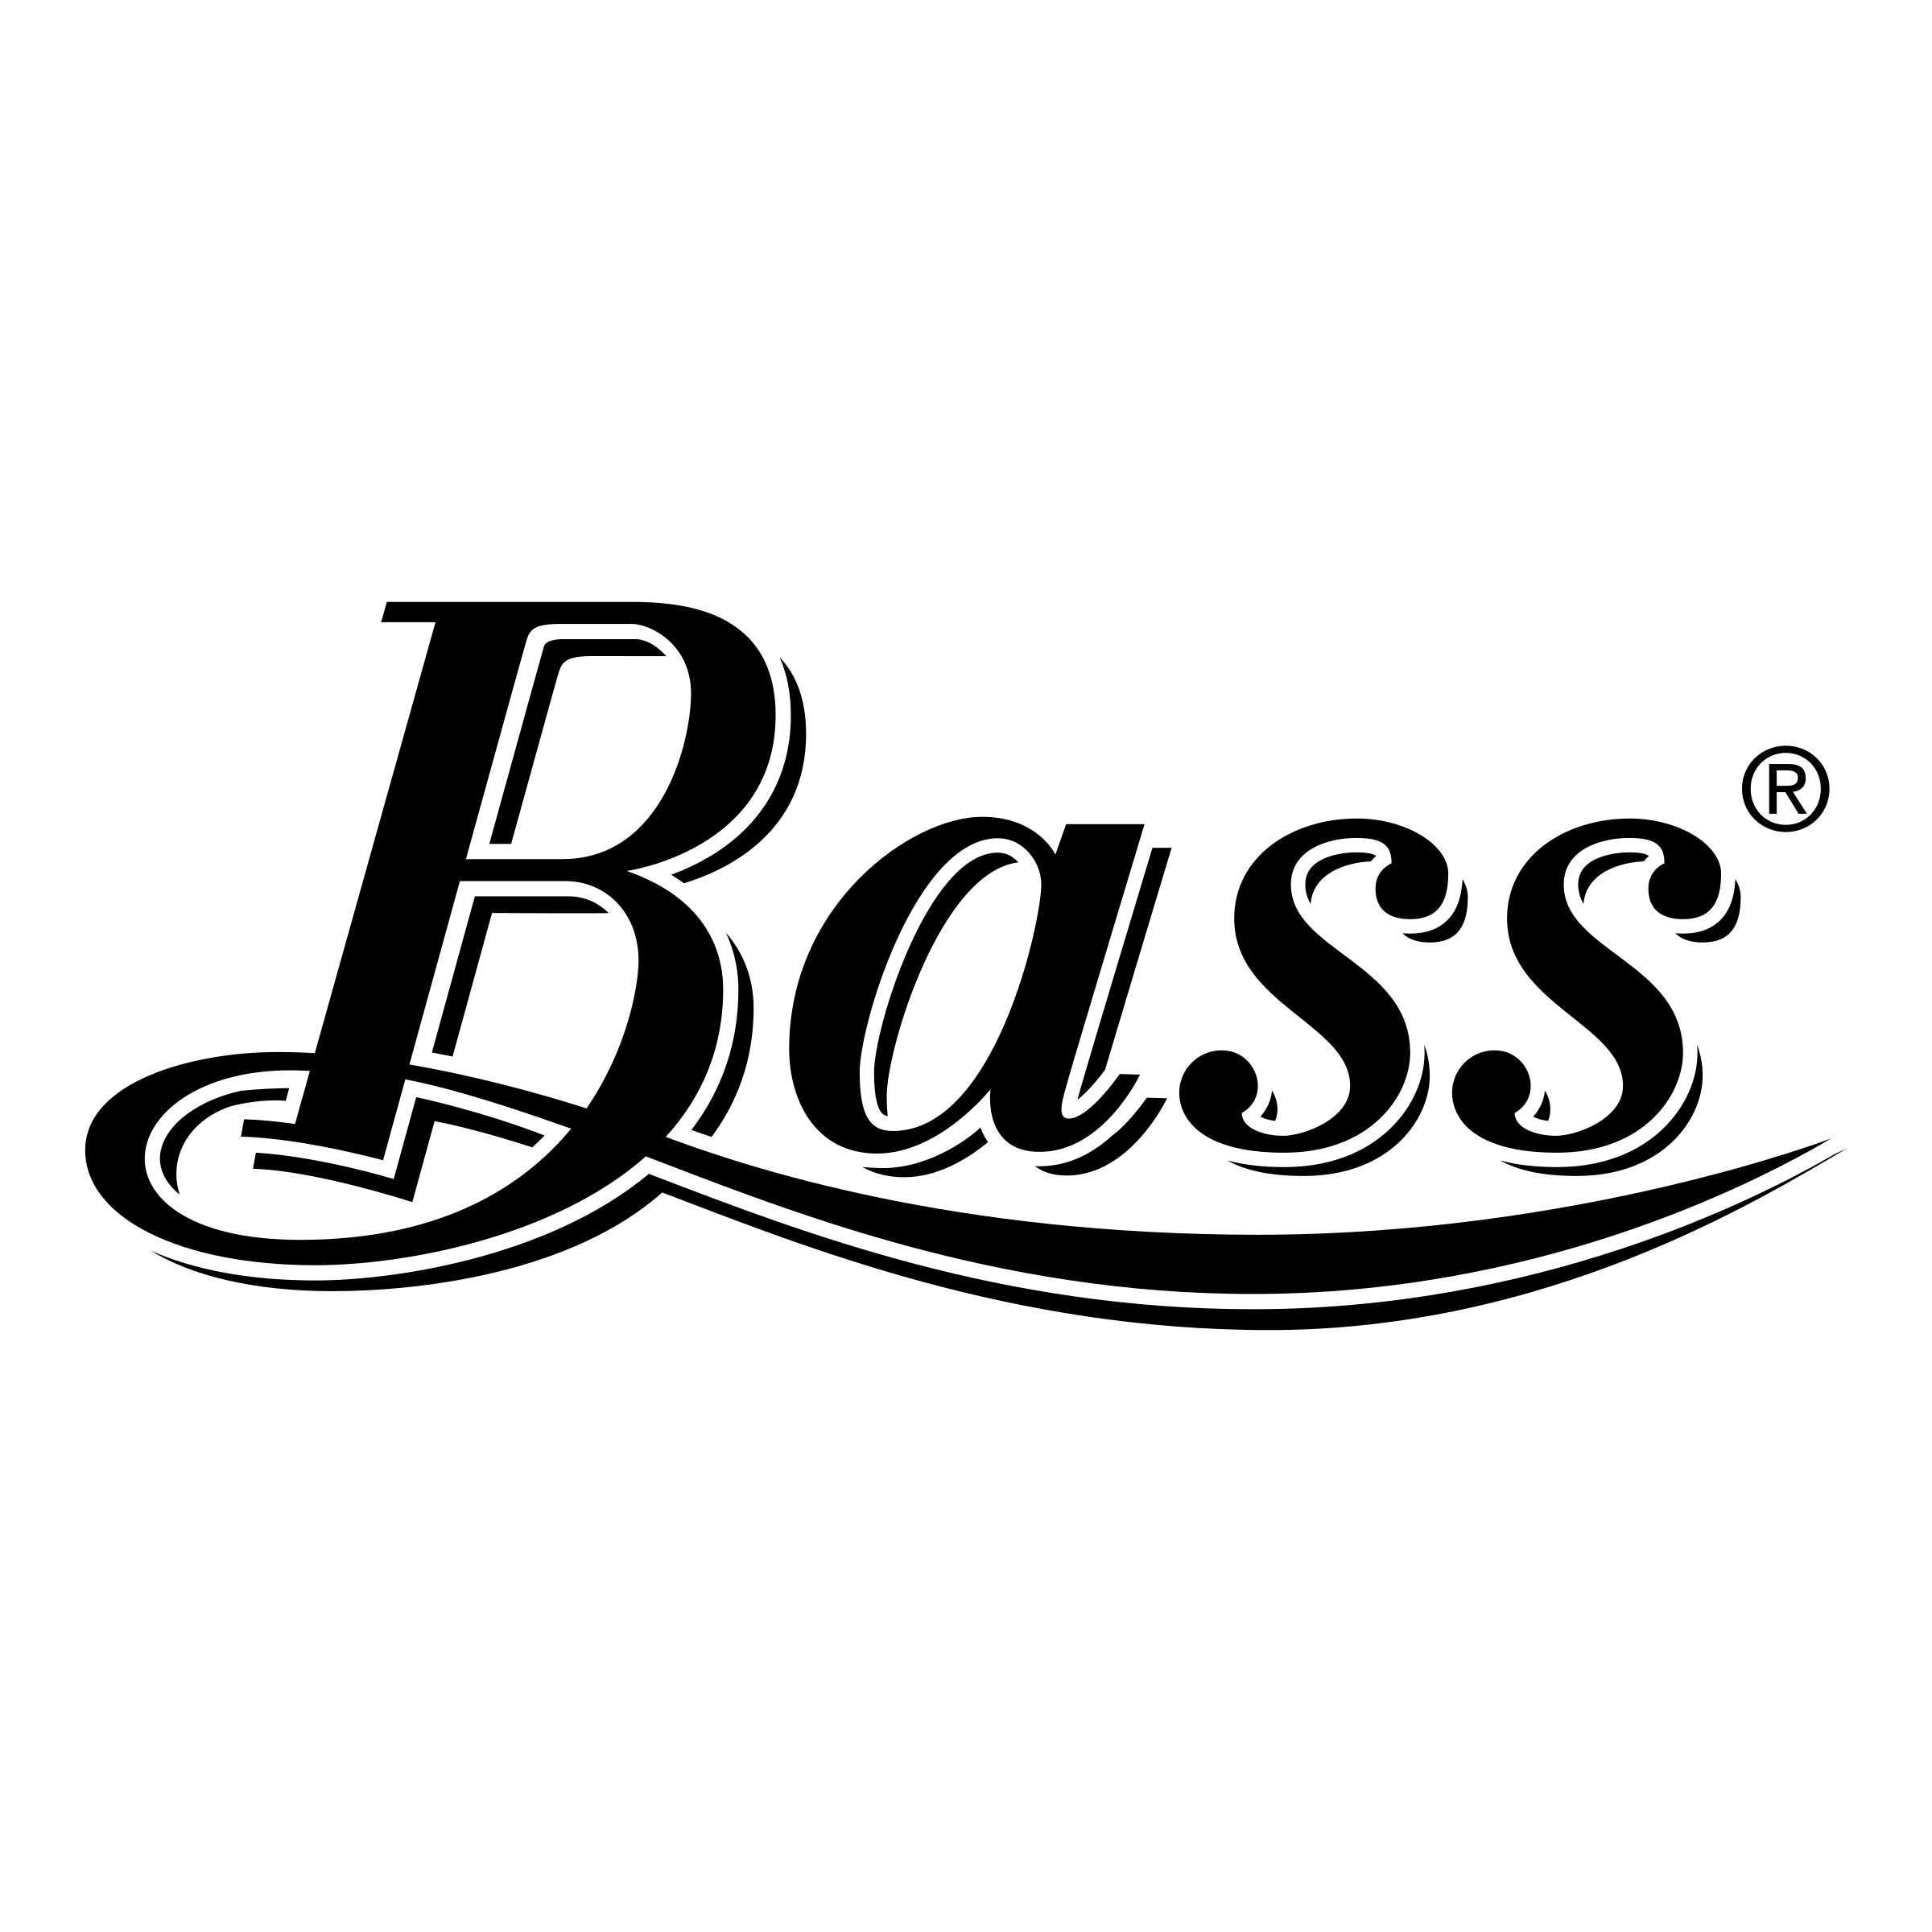 Black Bass Logo - Bass 02 Logo PNG Transparent & SVG Vector - Freebie Supply